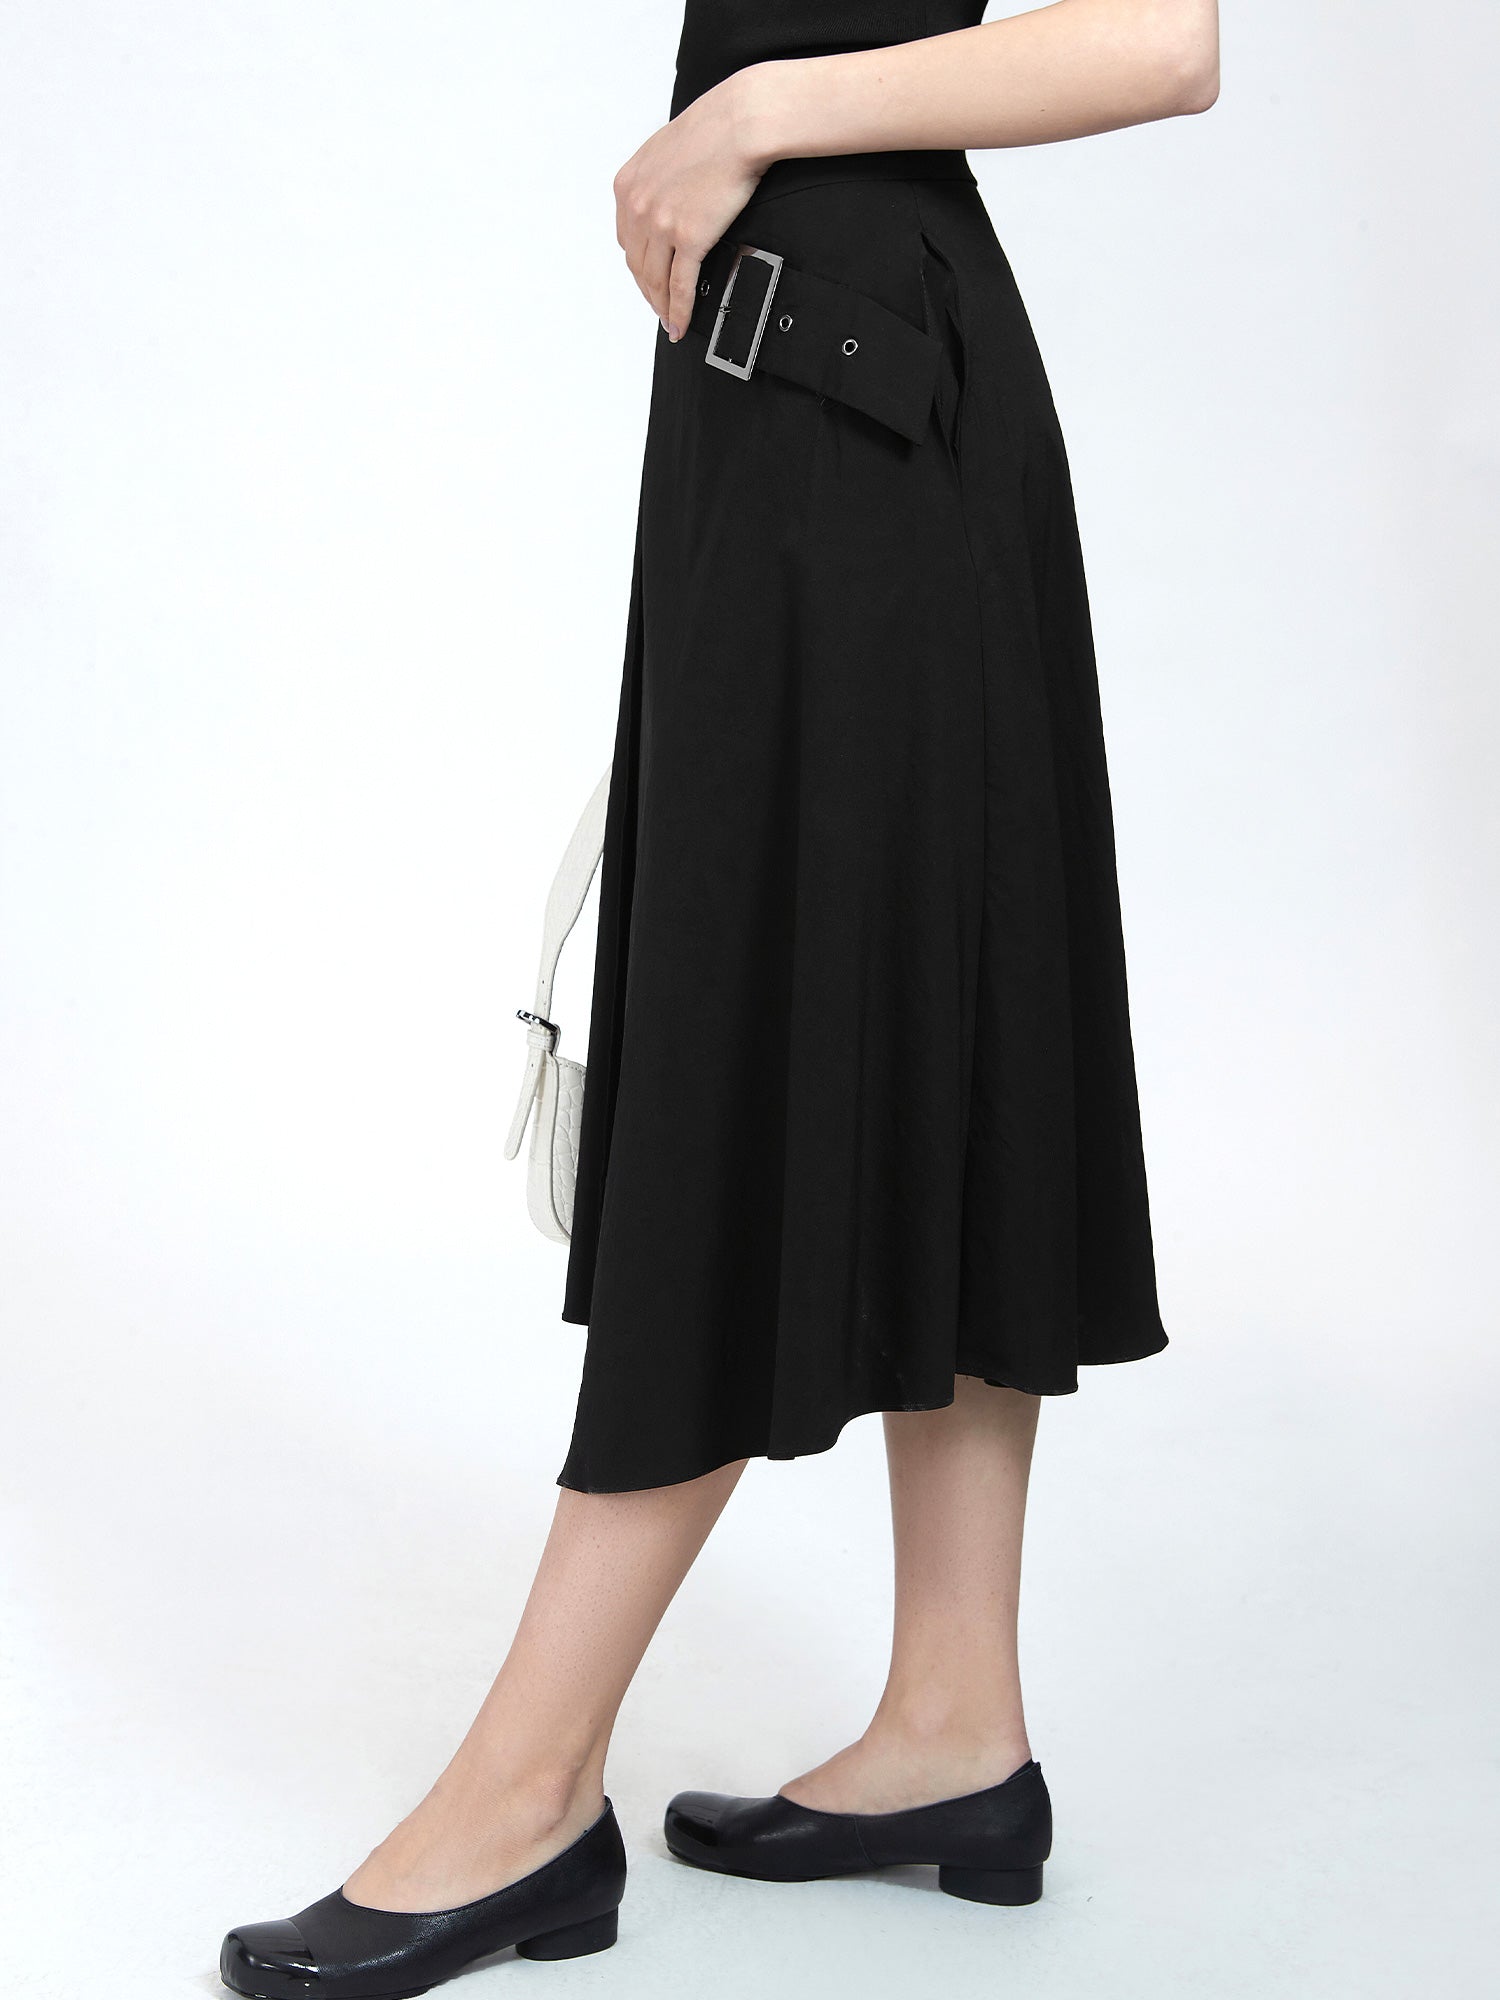 Irregular hem skirt with elegant fashion style